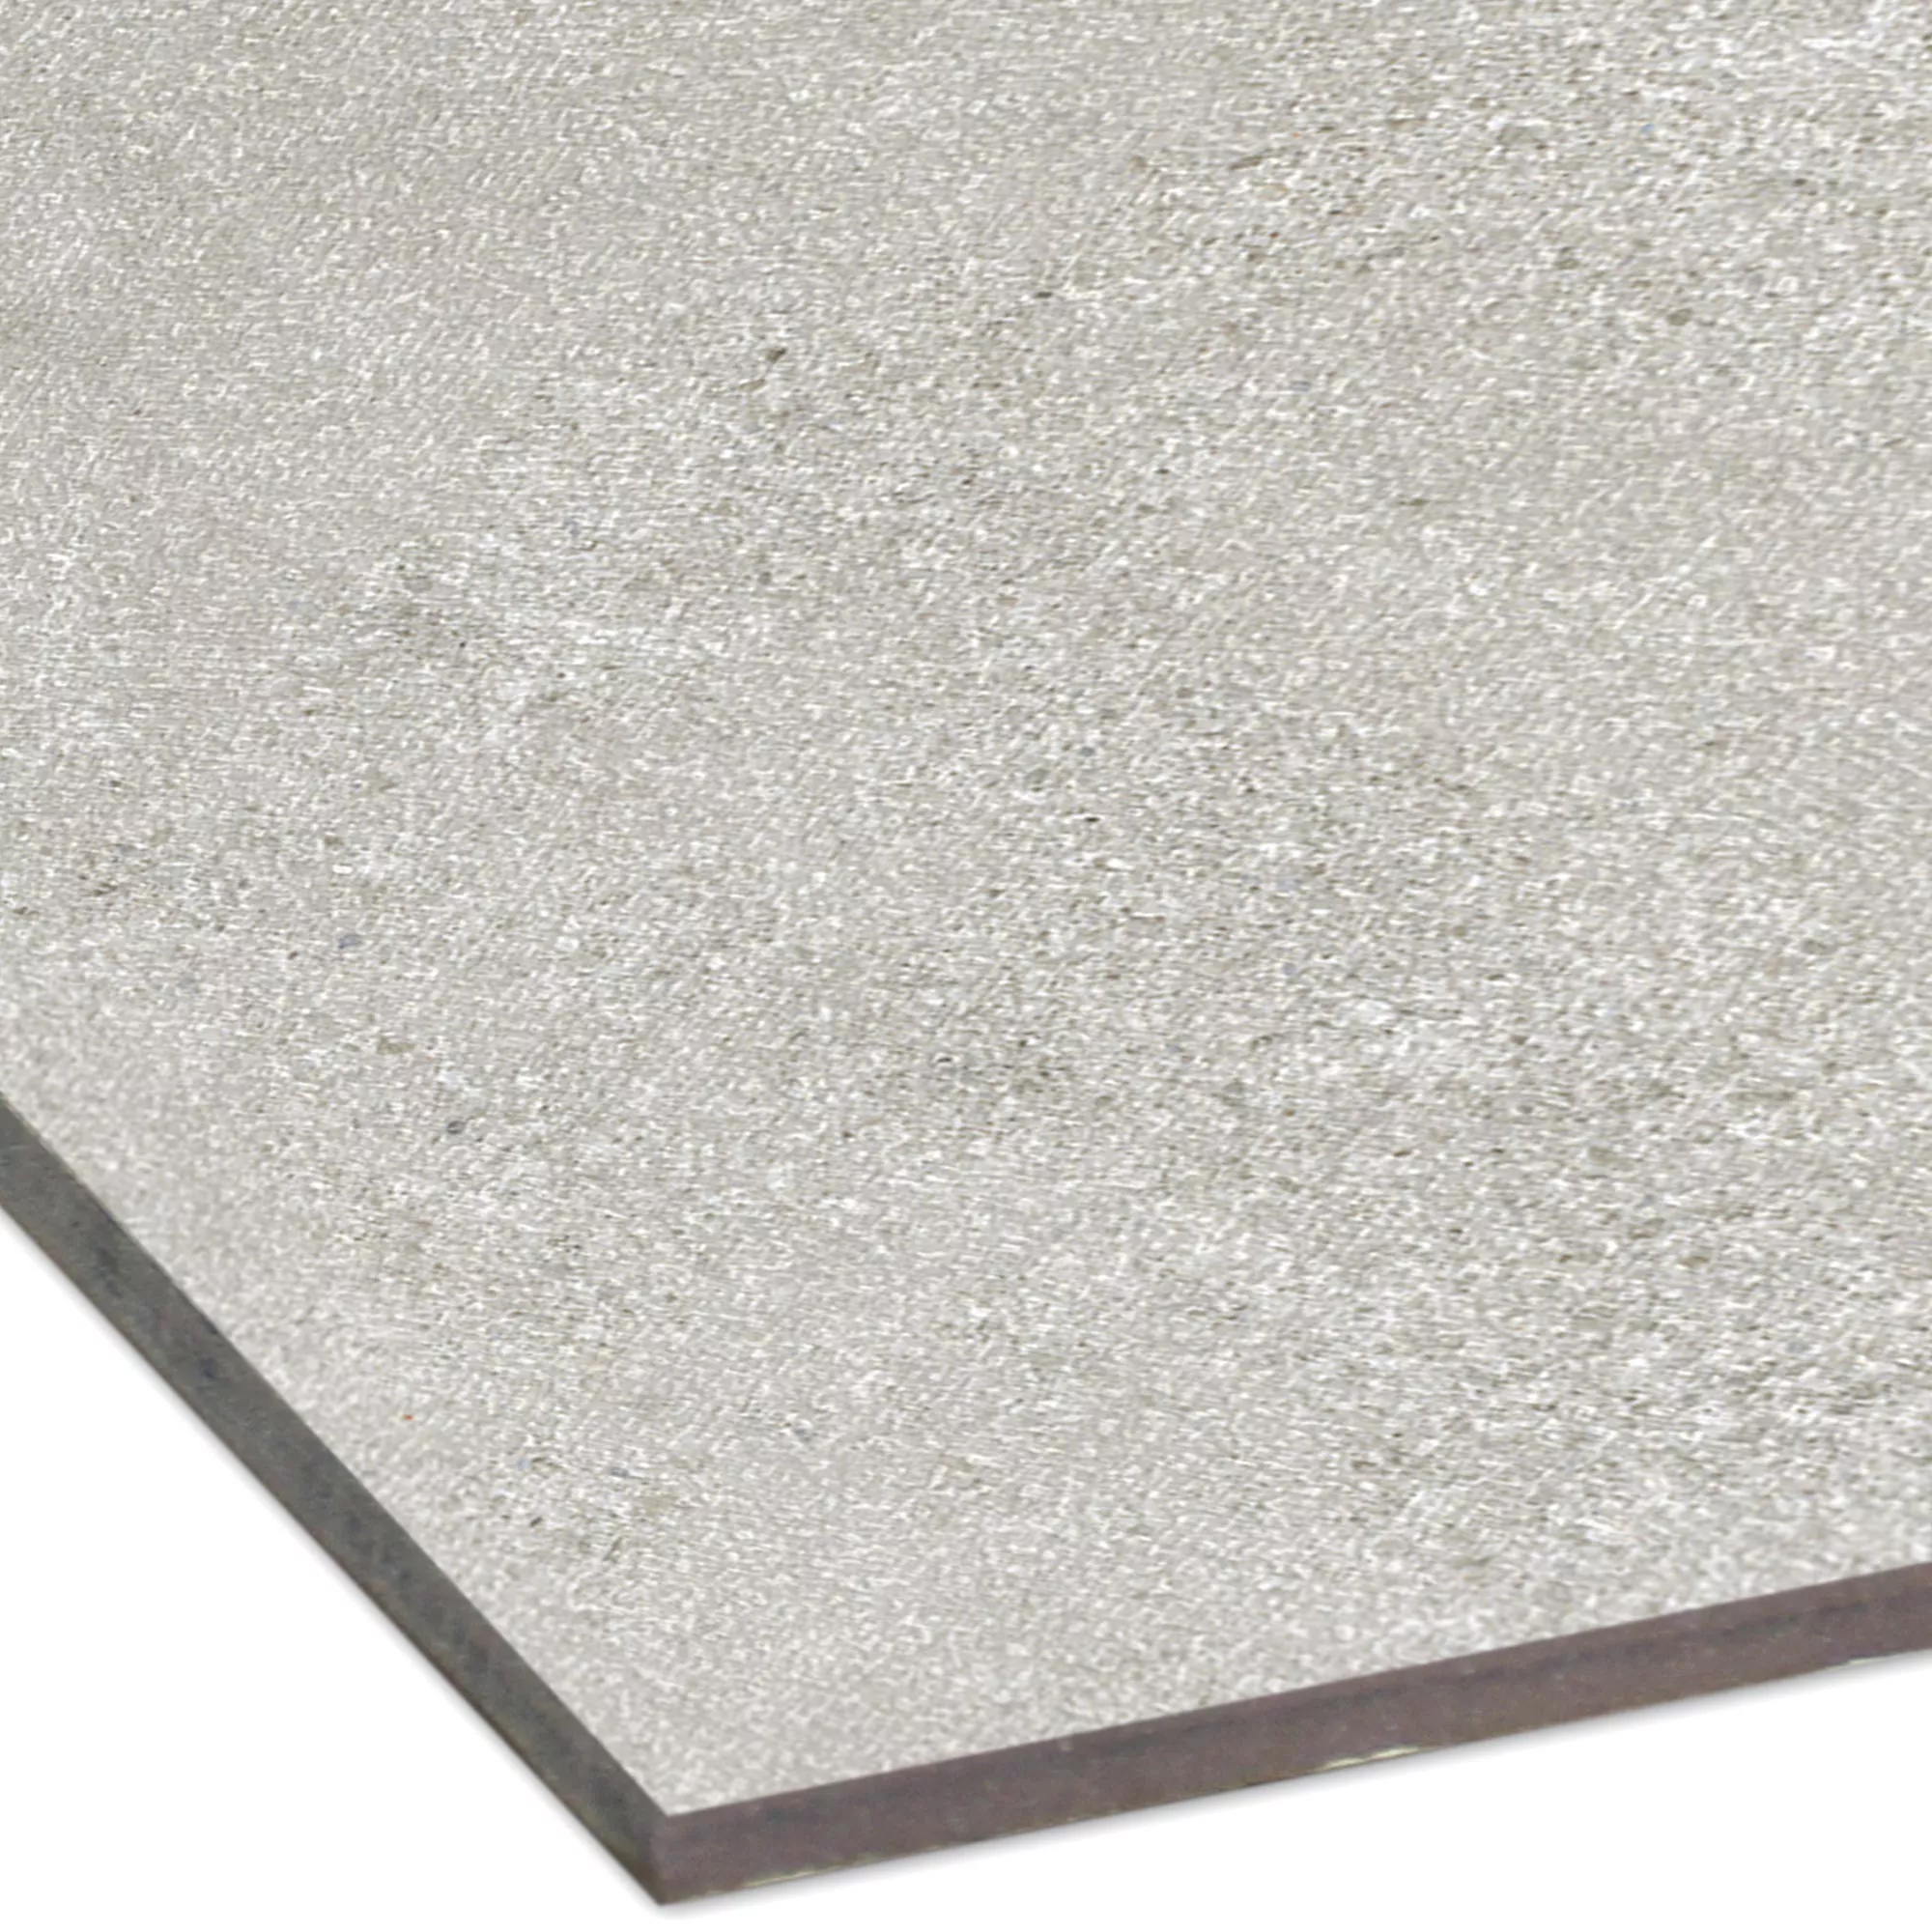 Floor Tiles Galilea Unglazed R10B Grey 60x60cm